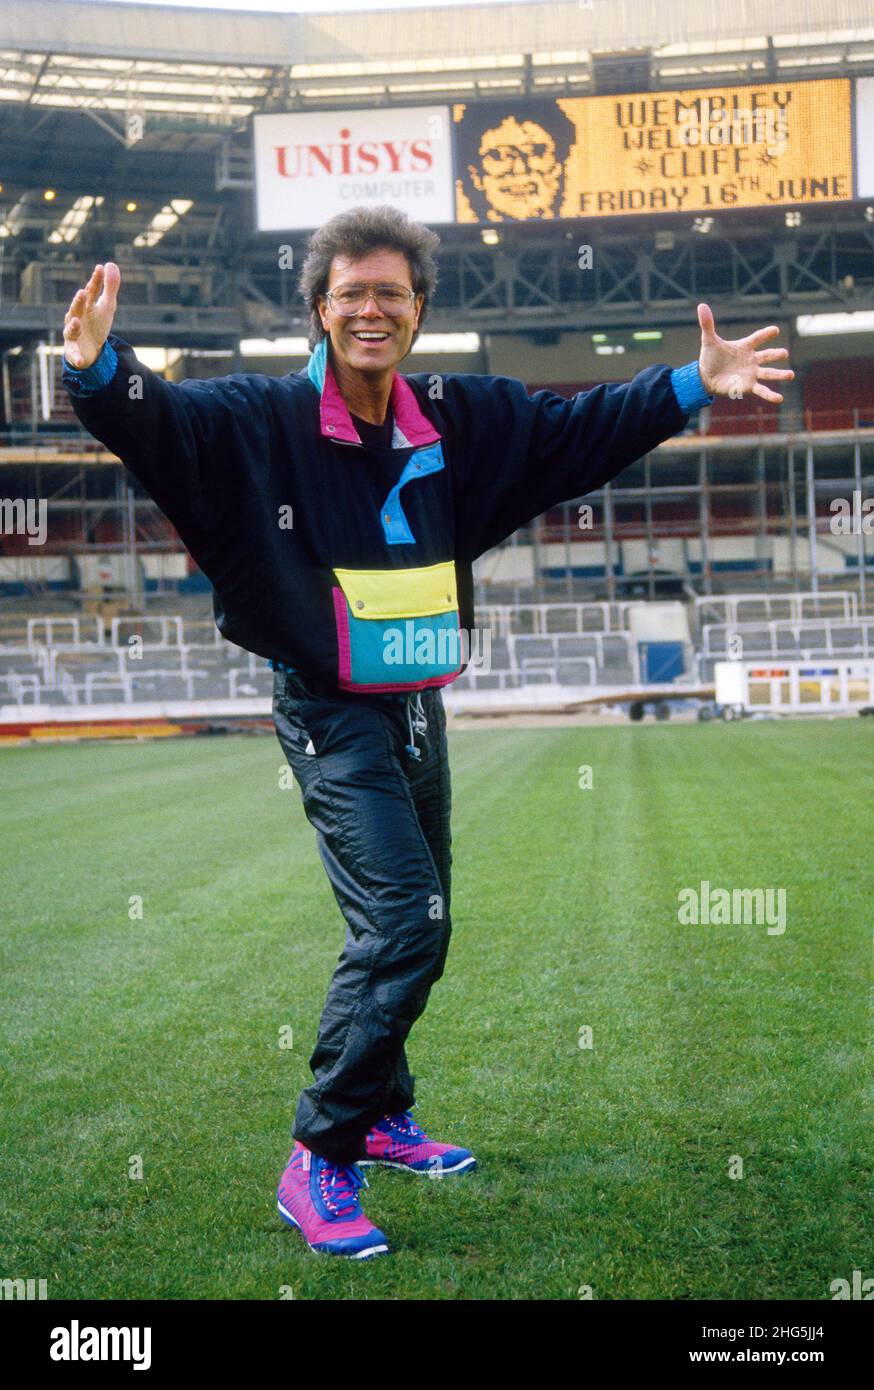 Cliff Richard promoting his concert at Wembley Stadium, London, 1989 Stock Photo